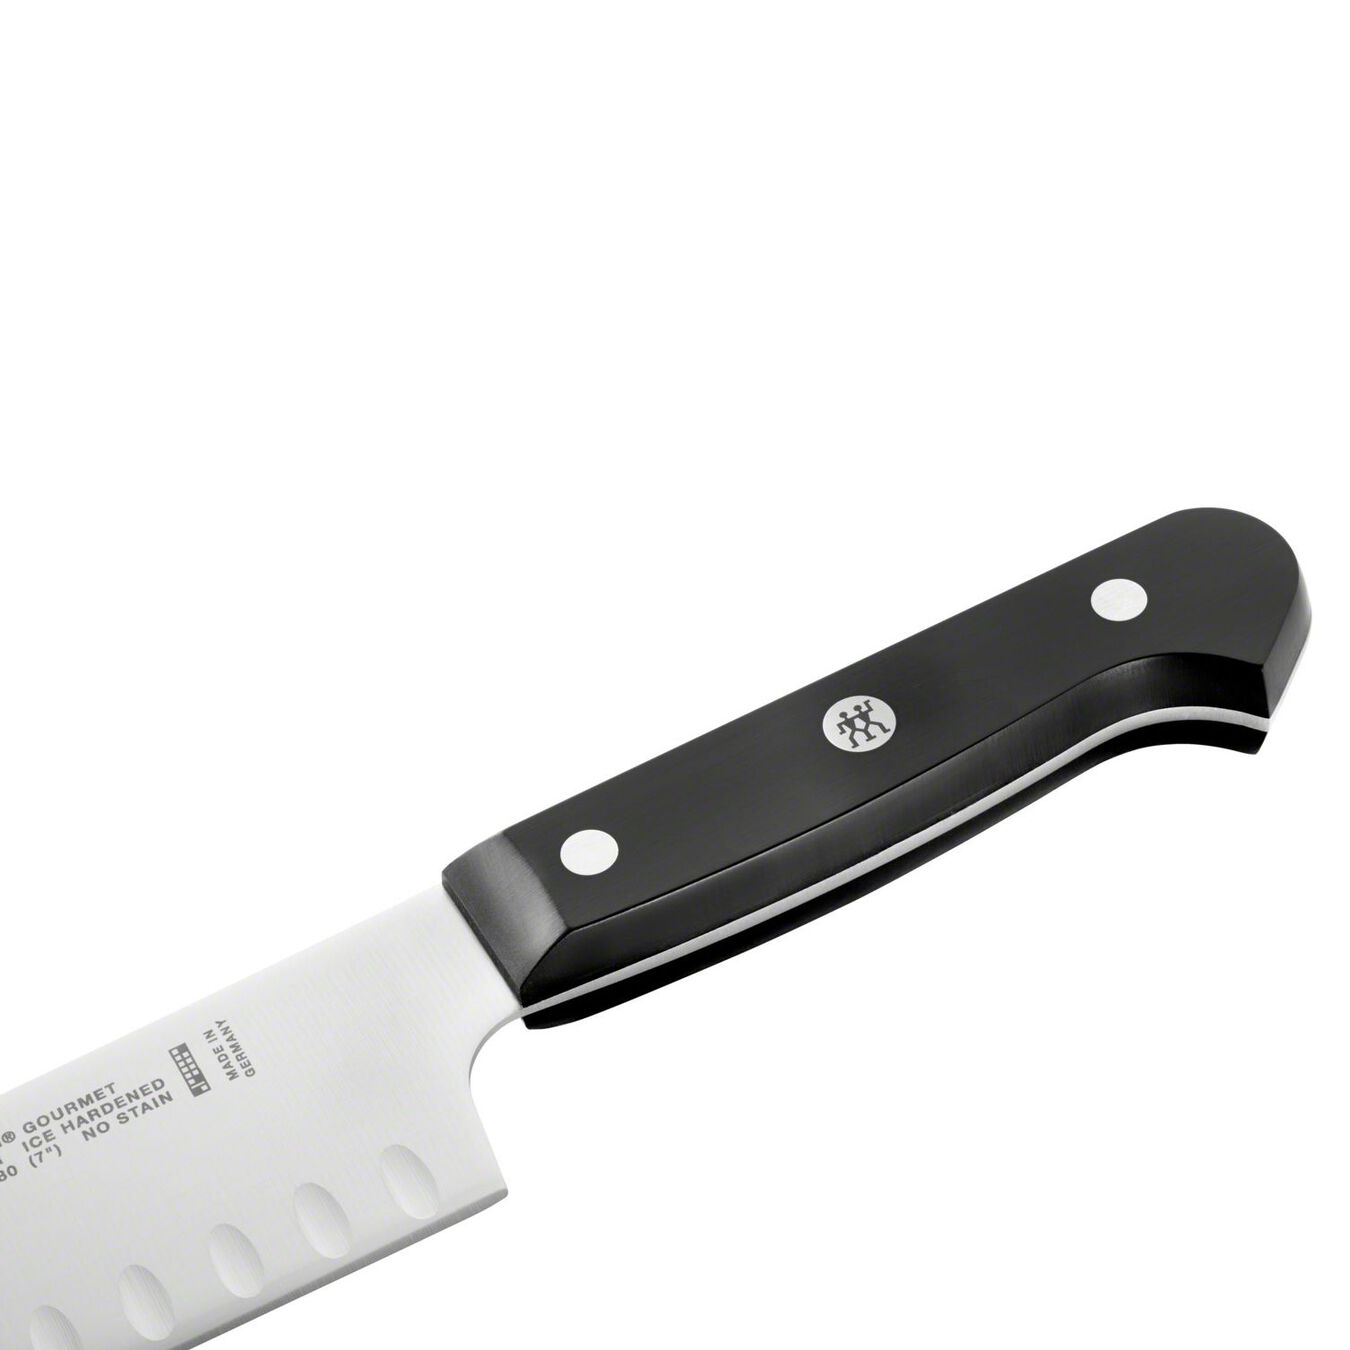 7-inch, Hollow Edge Santoku Knife,,large 4